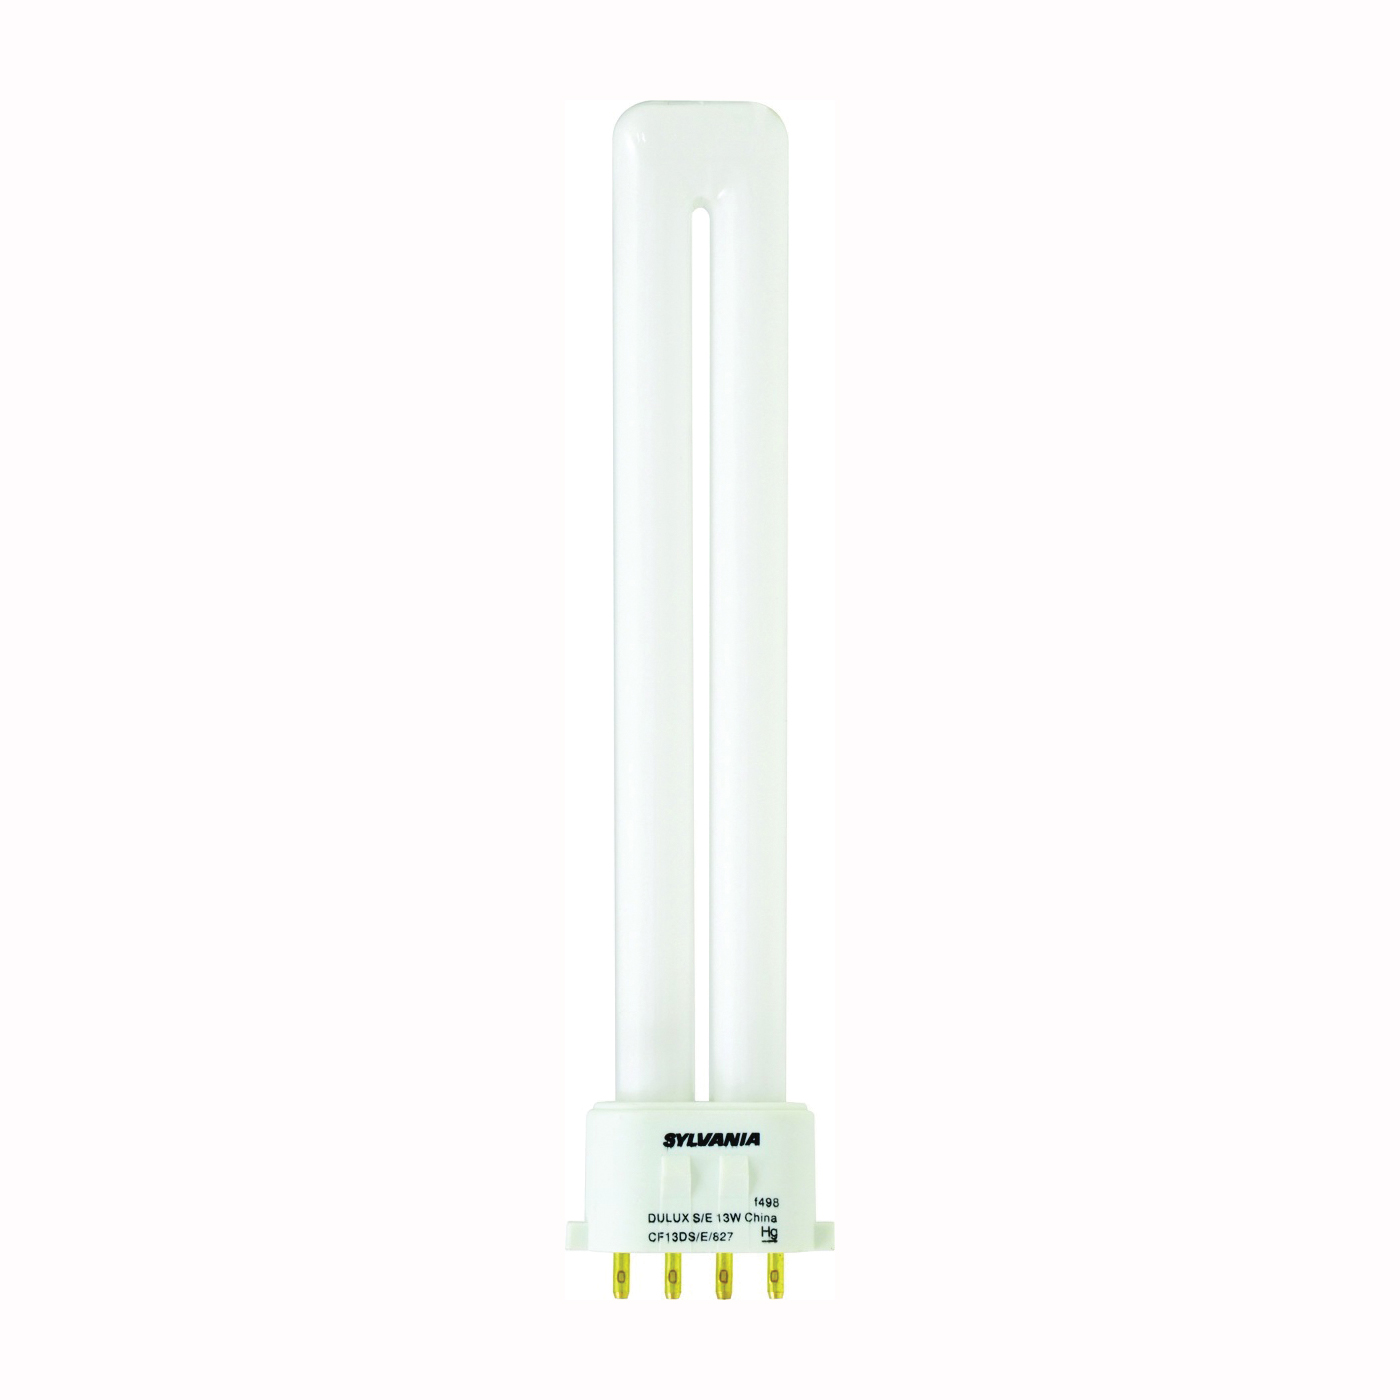 20314 Compact Fluorescent Bulb, 13 W, T4 Lamp, 2GX7 Lamp Base, 688 Lumens, 2700 K Color Temp, Soft White Light